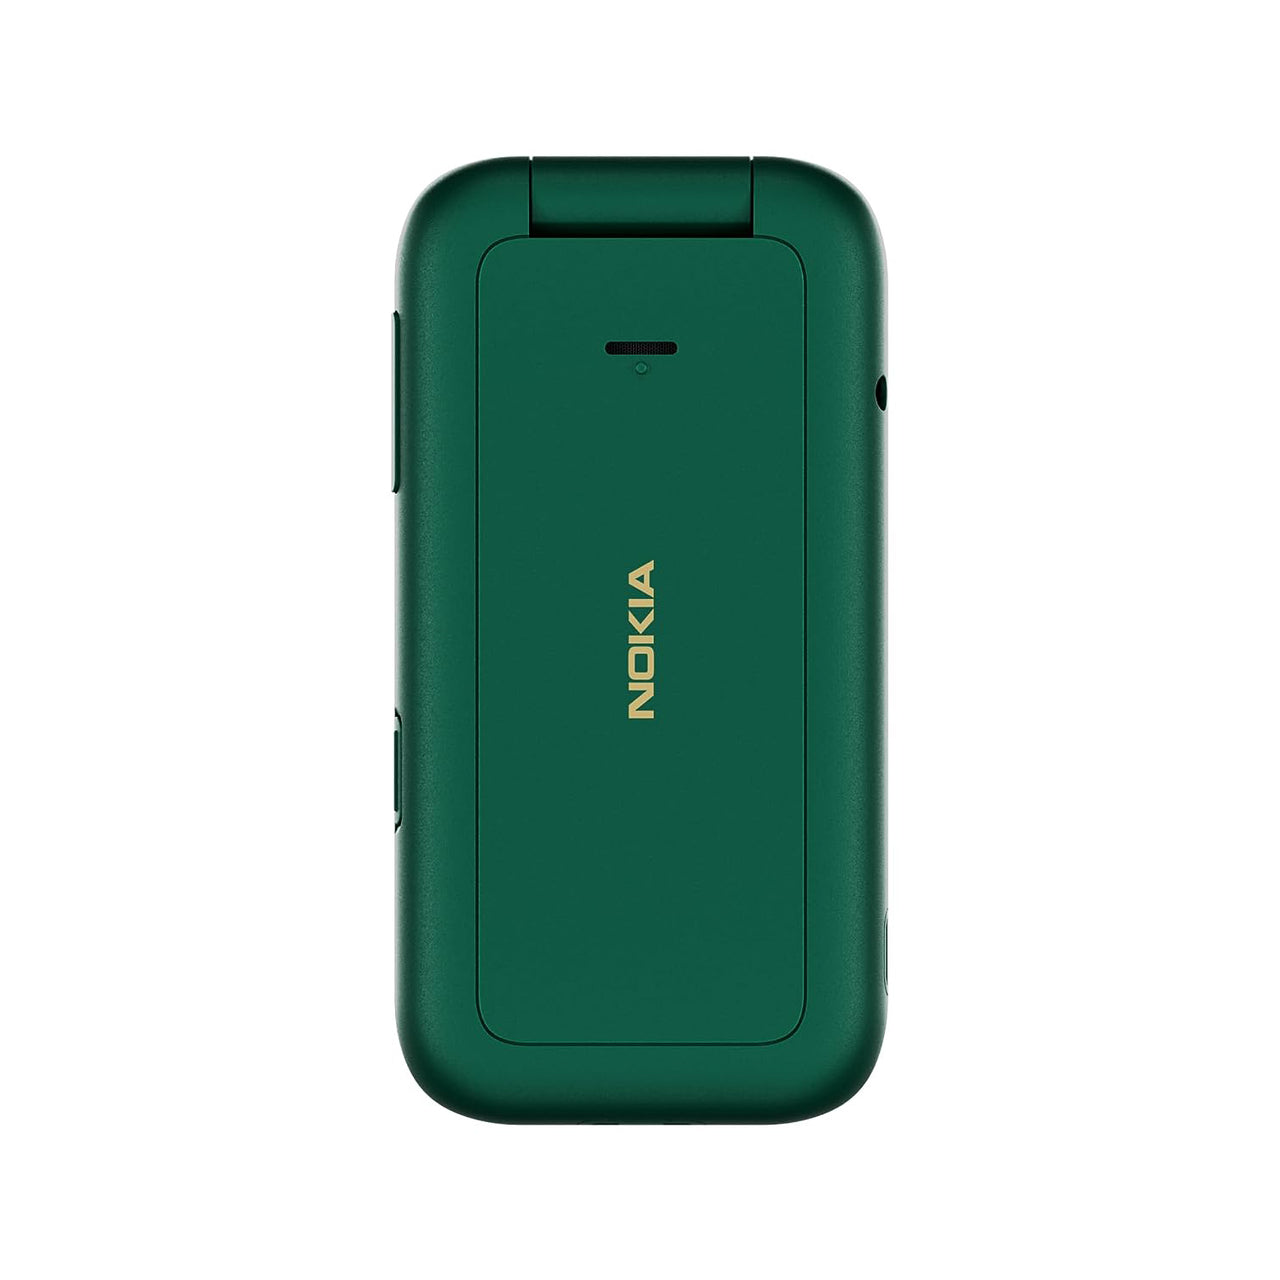 Nokia 2660 Dual SIM 4G FLIP BIG Button Phone Unlocked - Lush Green